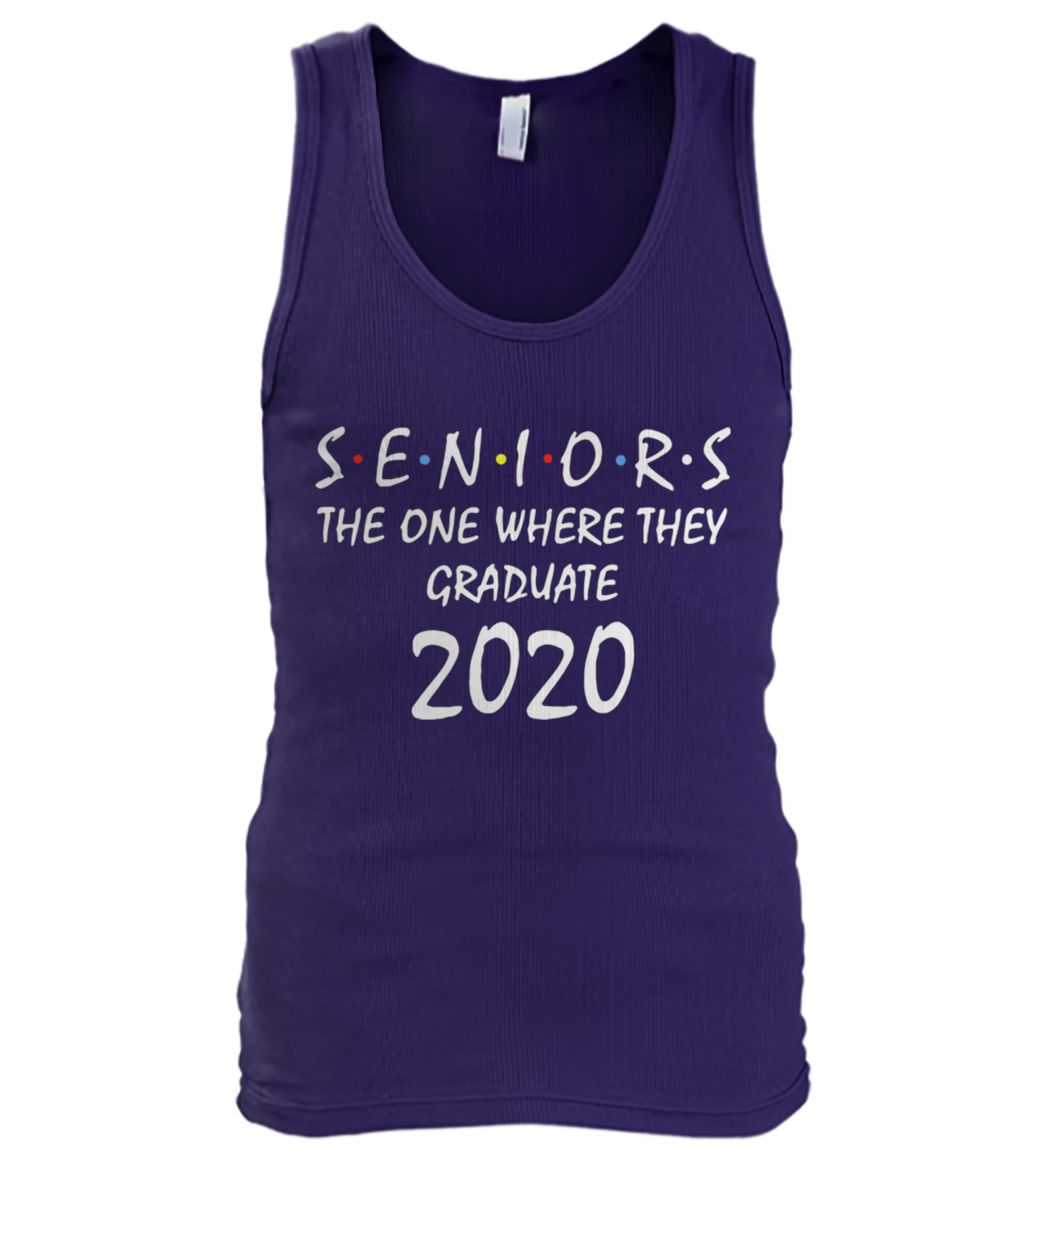 Seniors the one where they graduate 2020 men's tank top